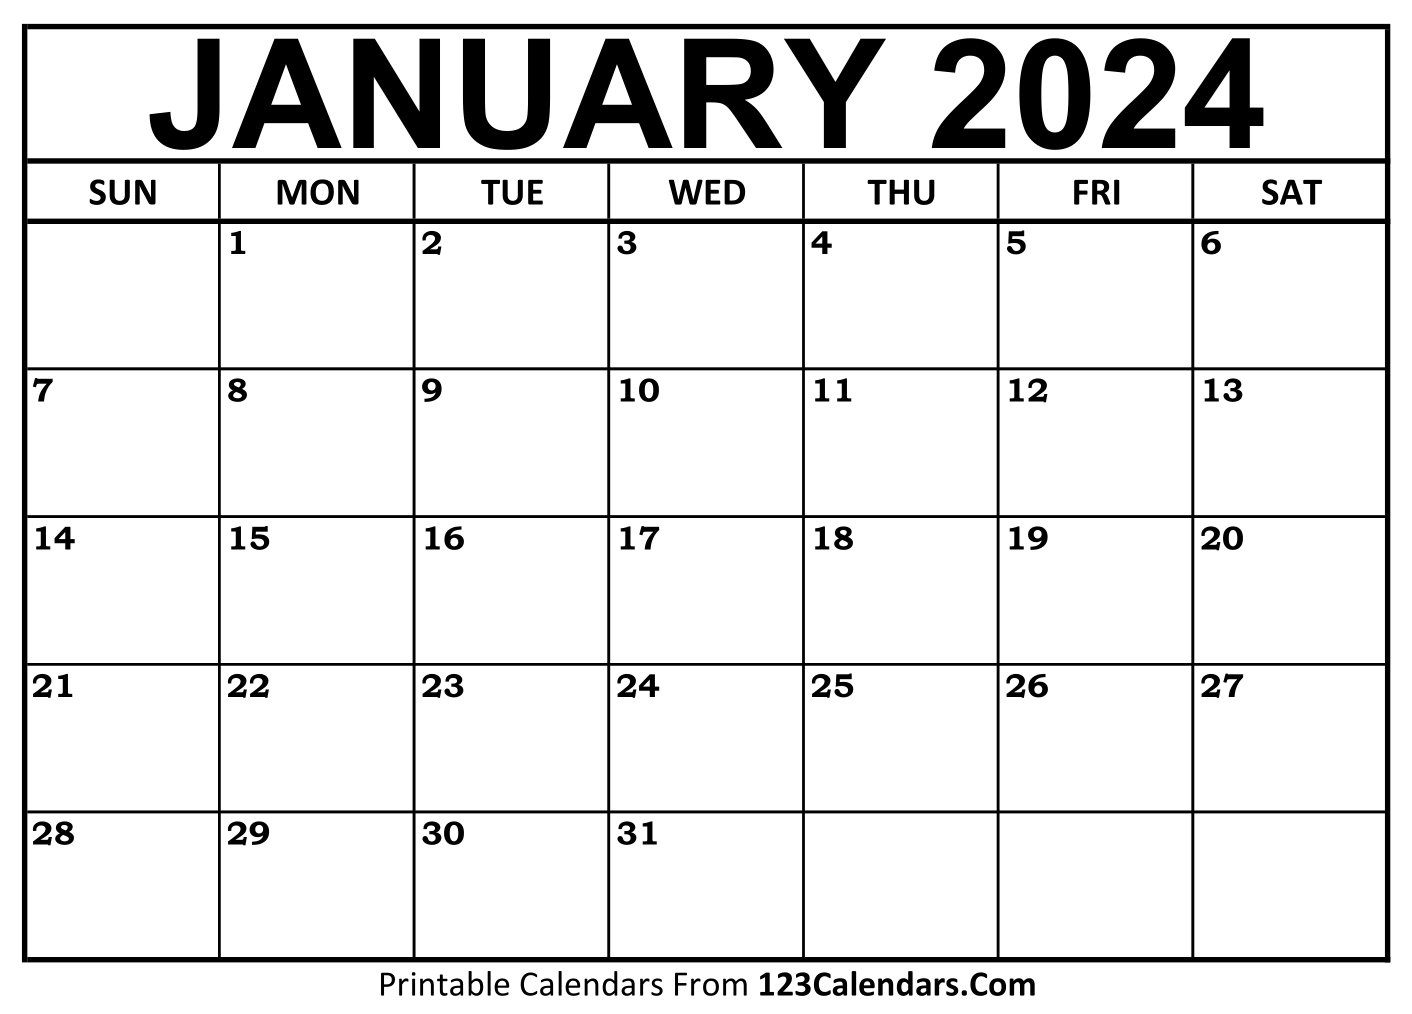 Printable January 2024 Calendar Templates - 123Calendars | Free Calendar 2024 Printable Monthly